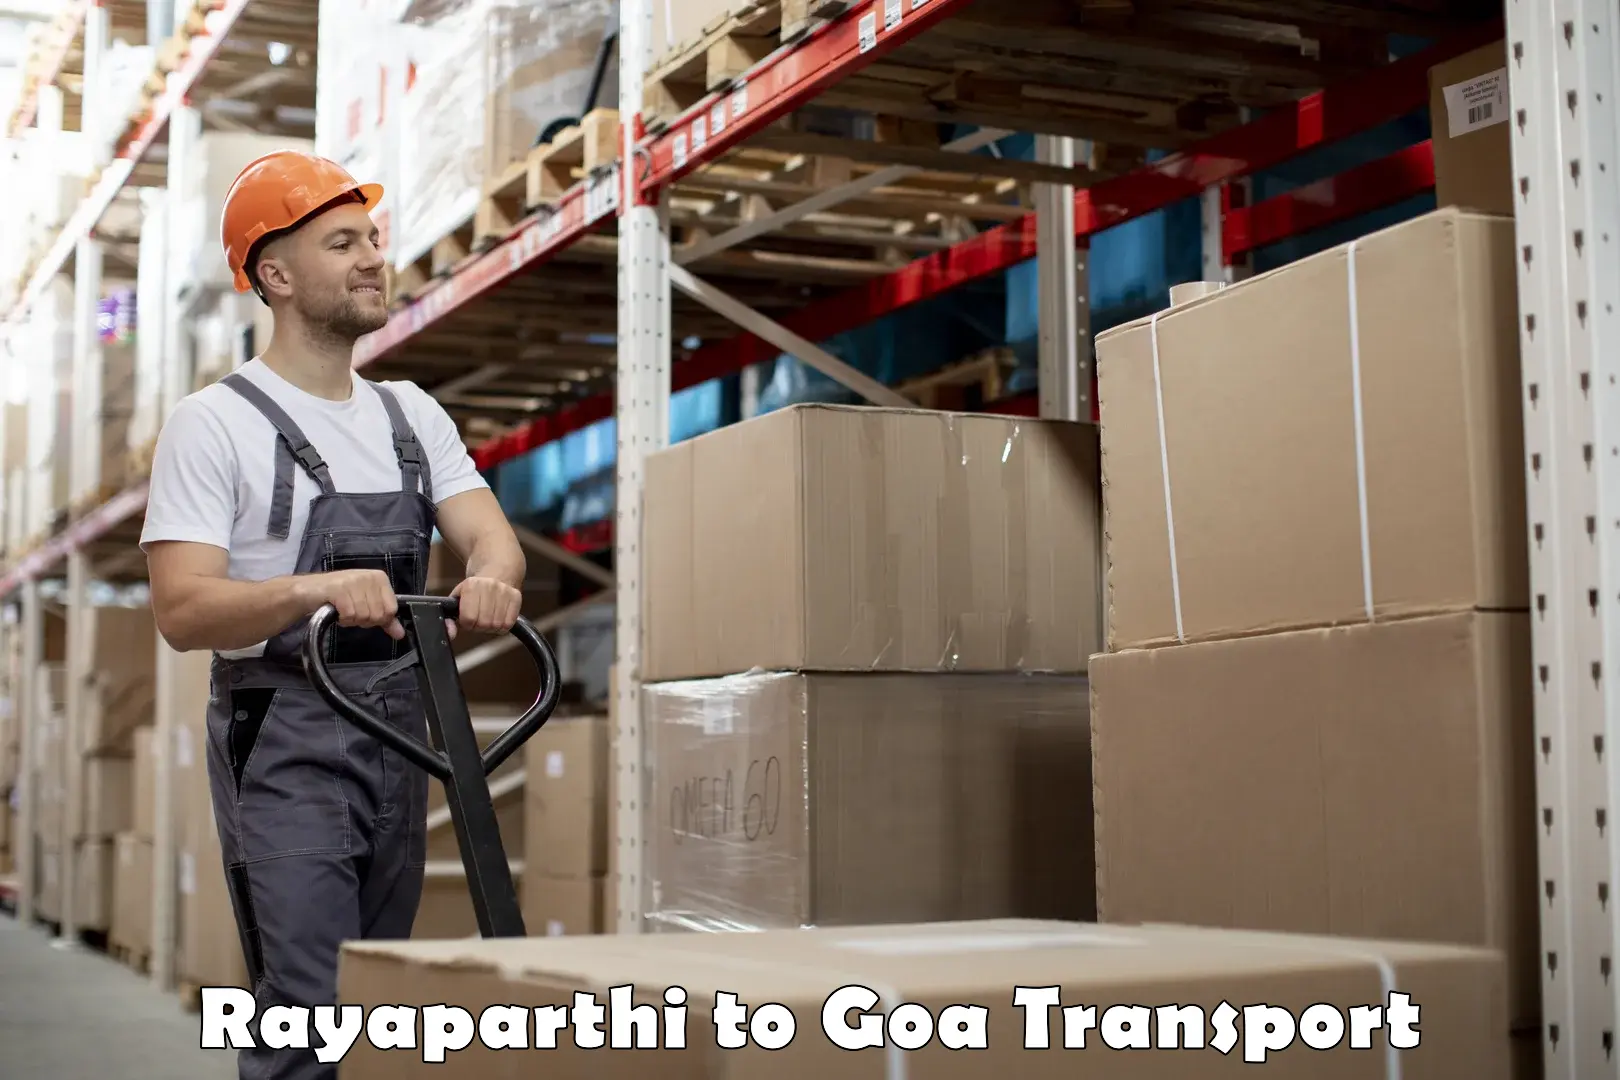 Sending bike to another city Rayaparthi to Goa